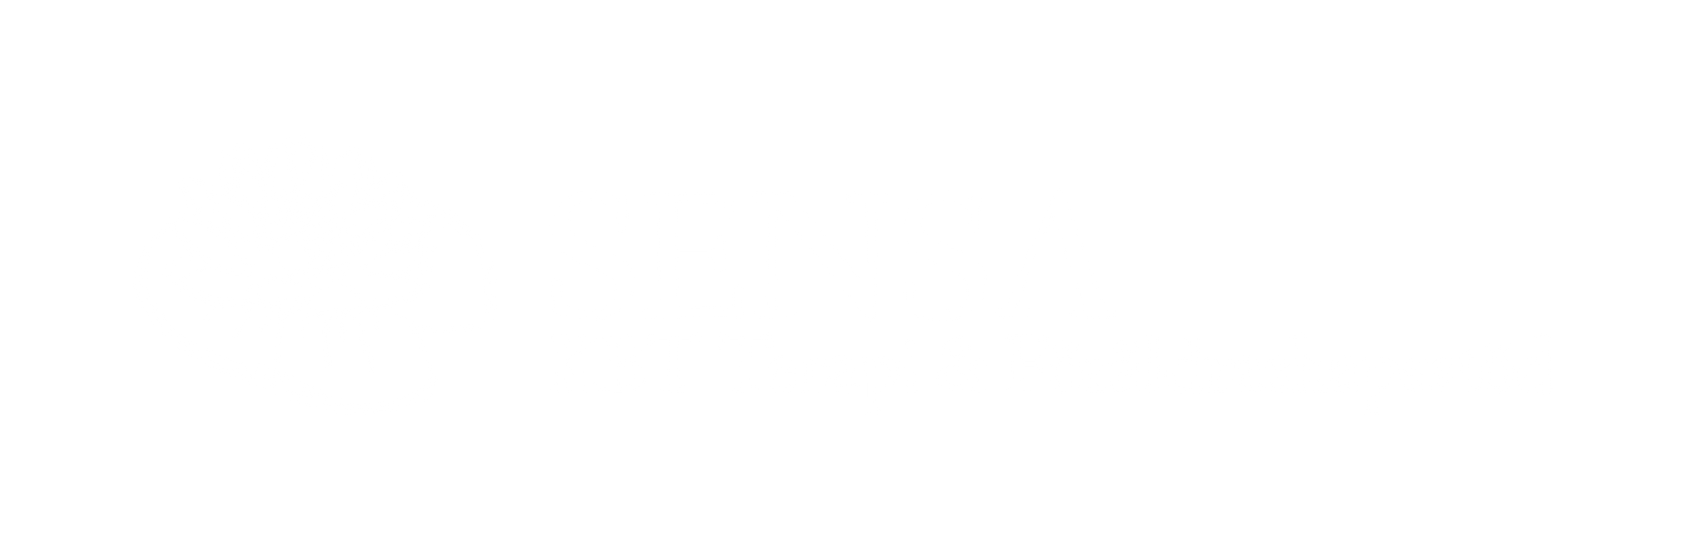 www.sensakbt.se